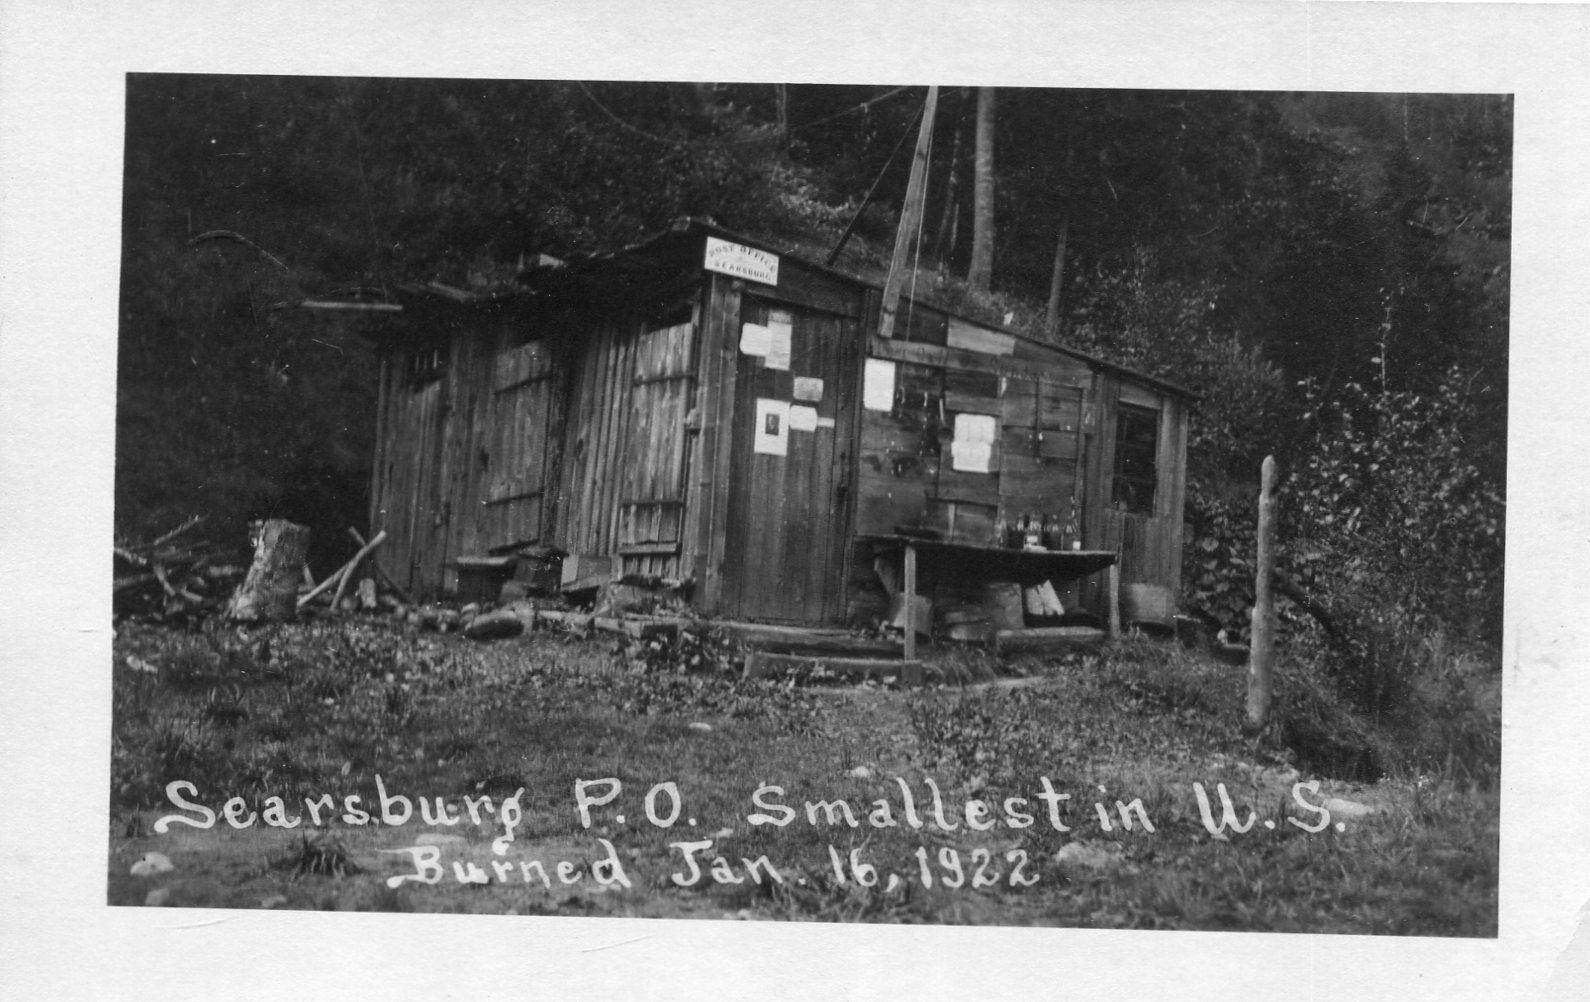 US card PHoto SEARSBURG Smallest card in U. 1922 S. Burned Jan 16 